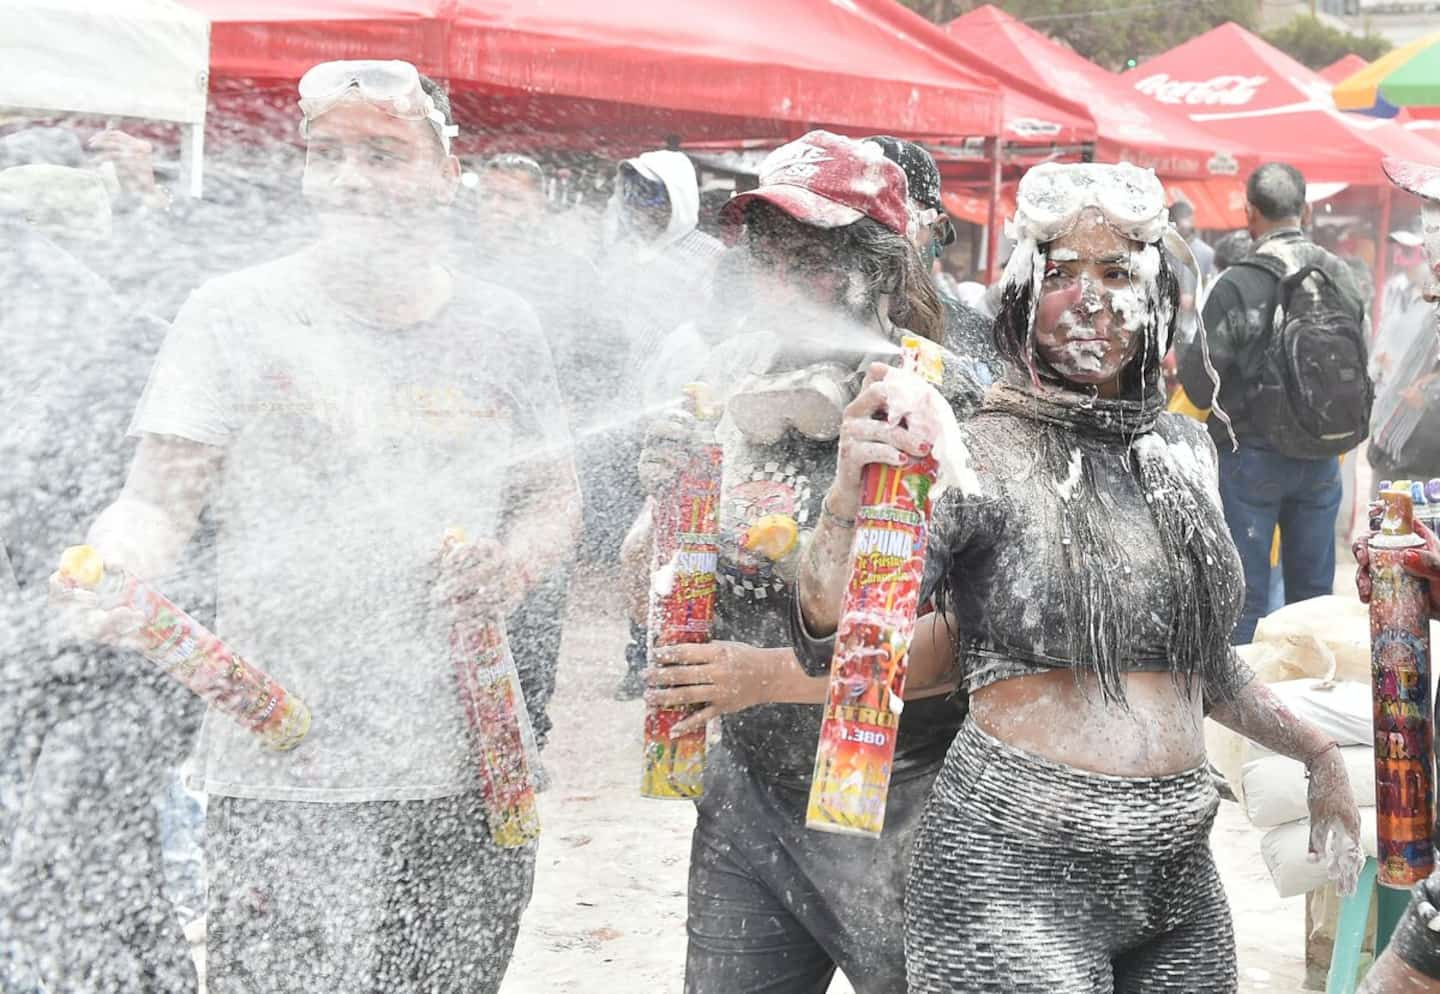 In Colombia, an astonishing “blackface” carnival to celebrate brotherhood